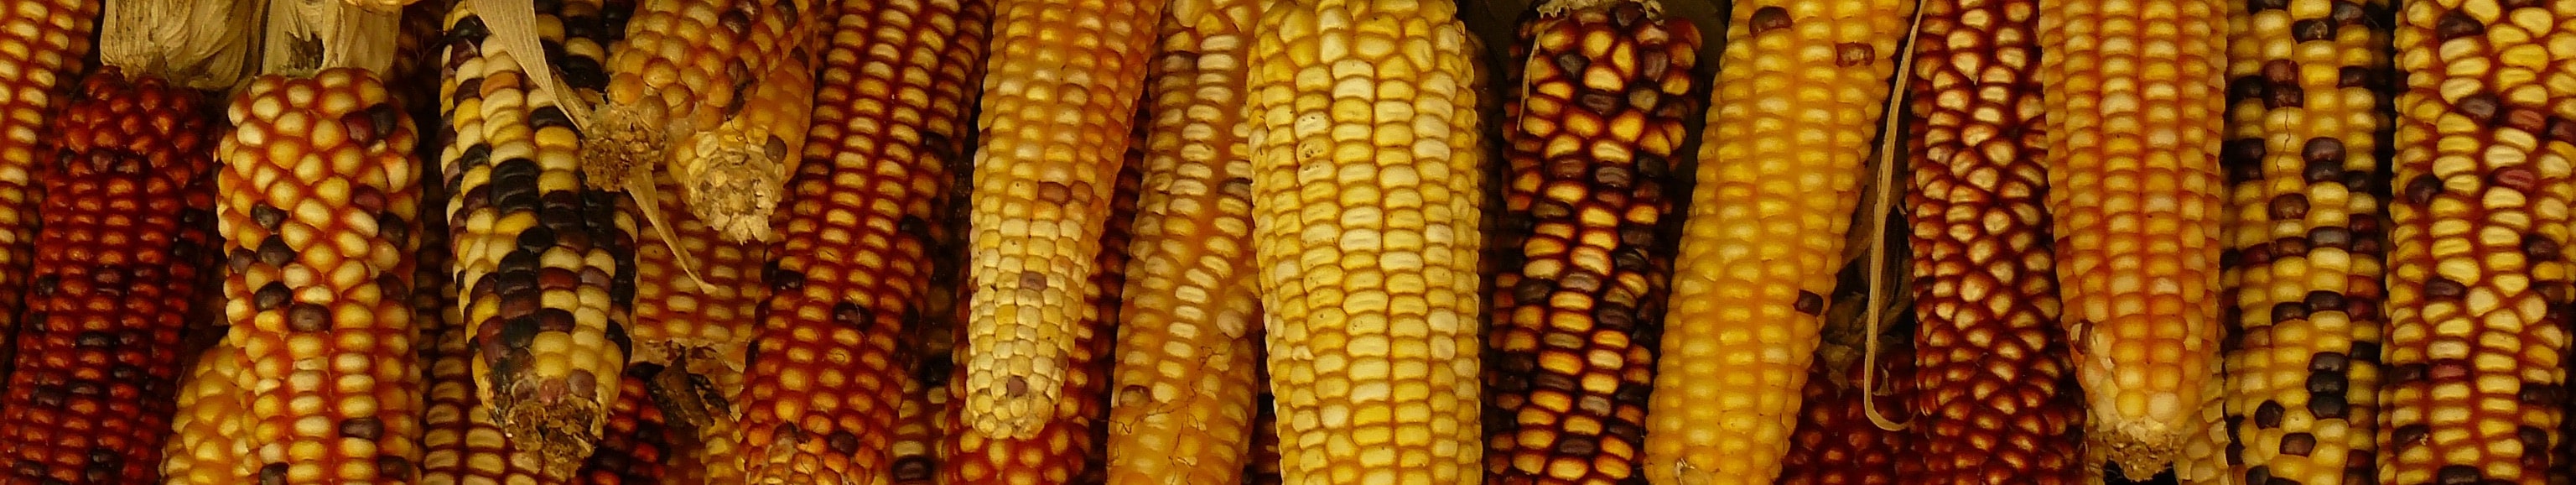 Corn Farmland For Sale